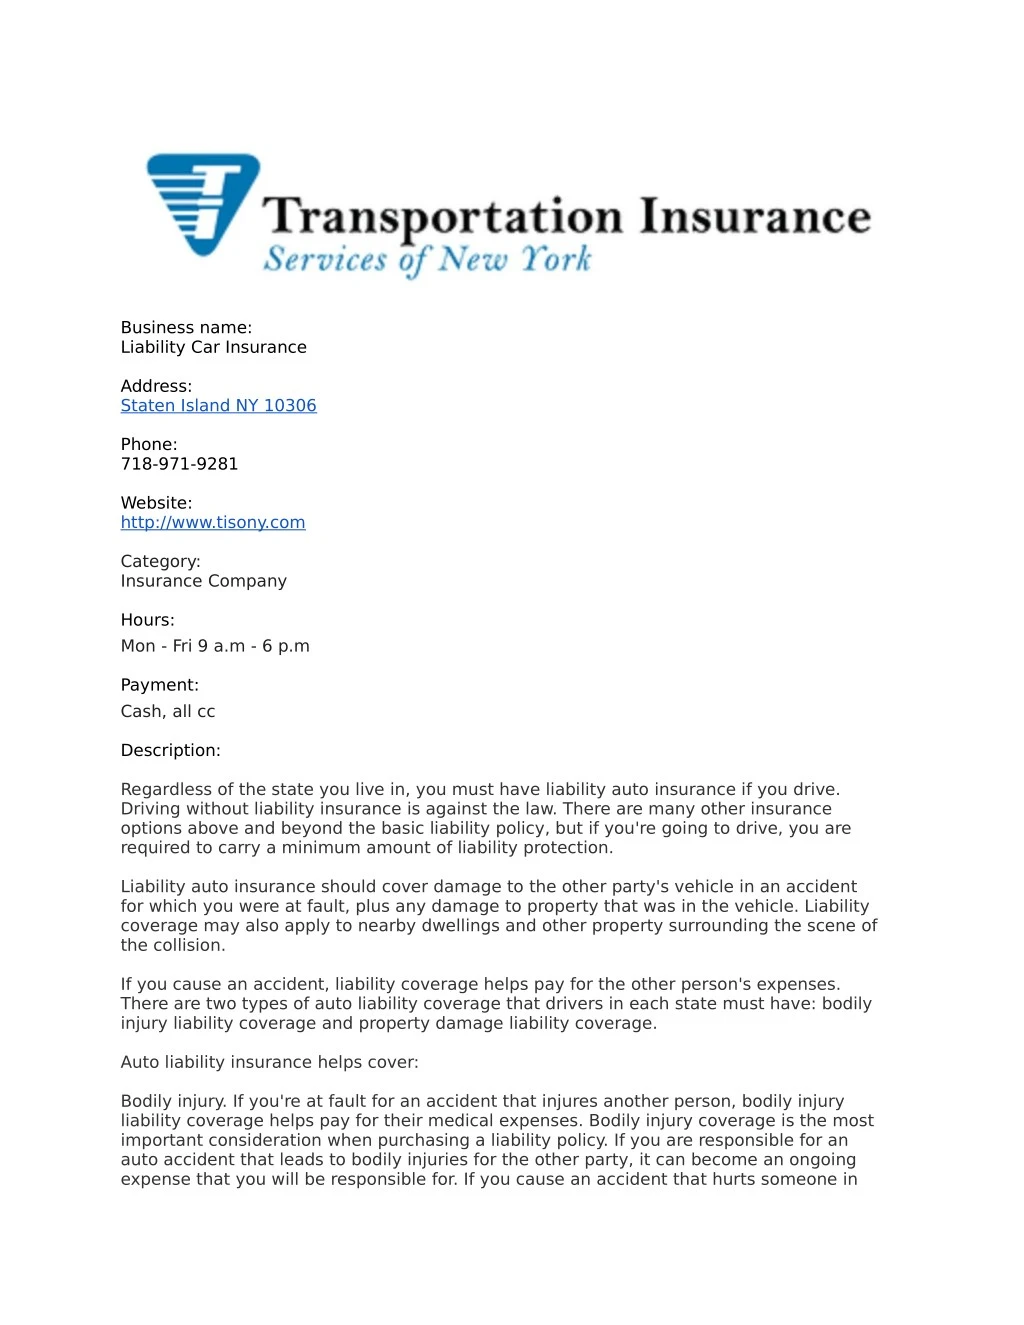 business name liability car insurance